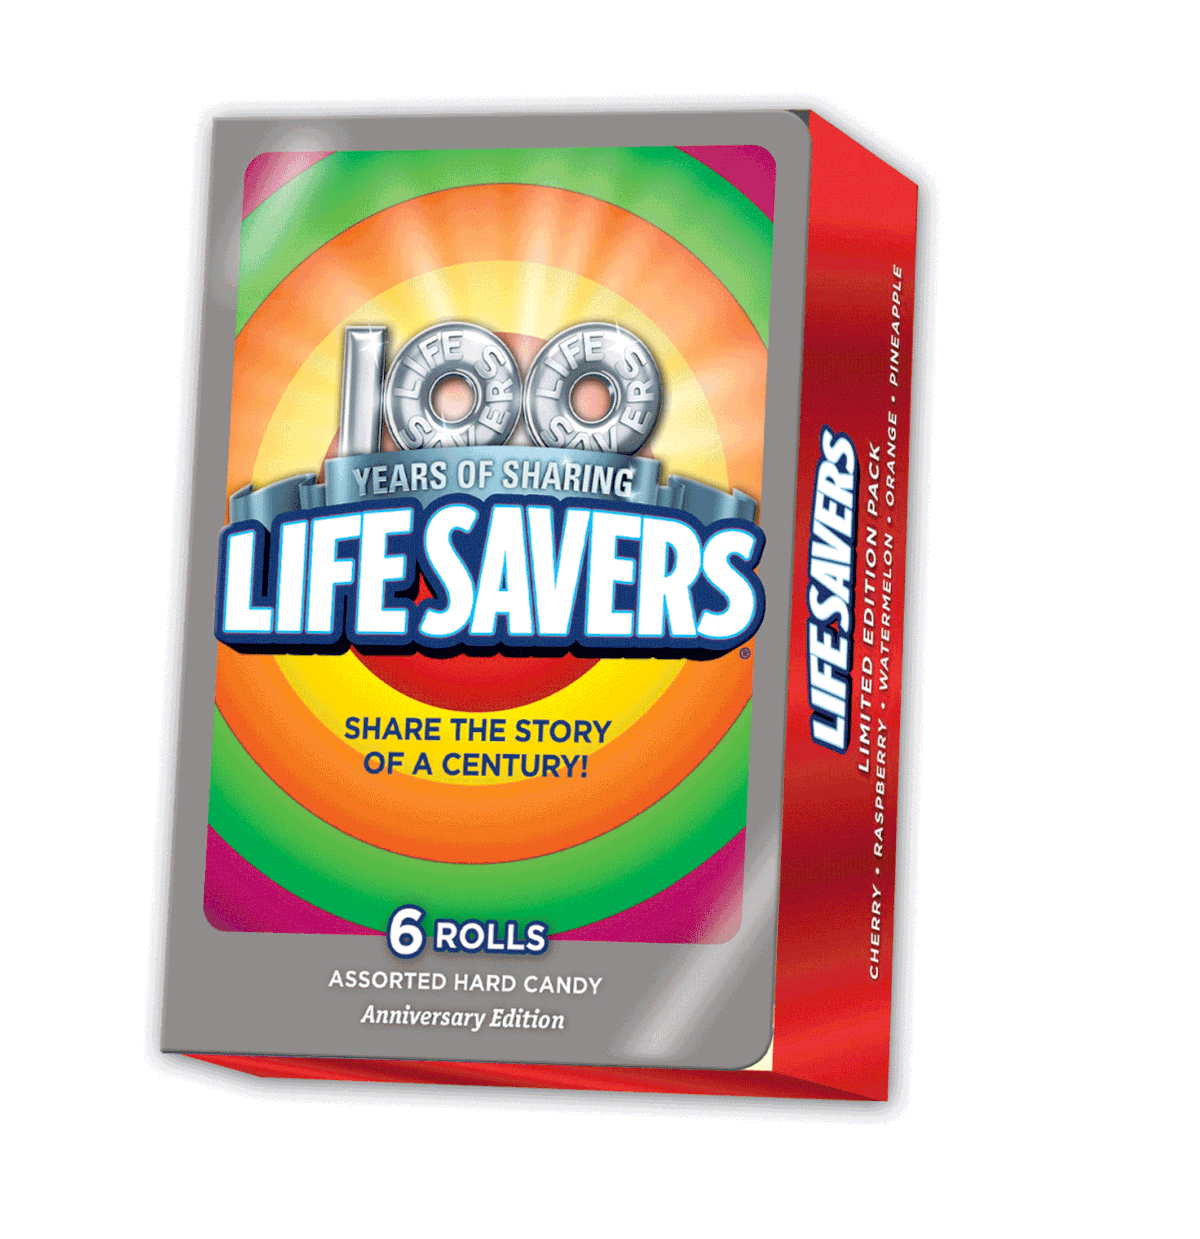 candy lifesaver book